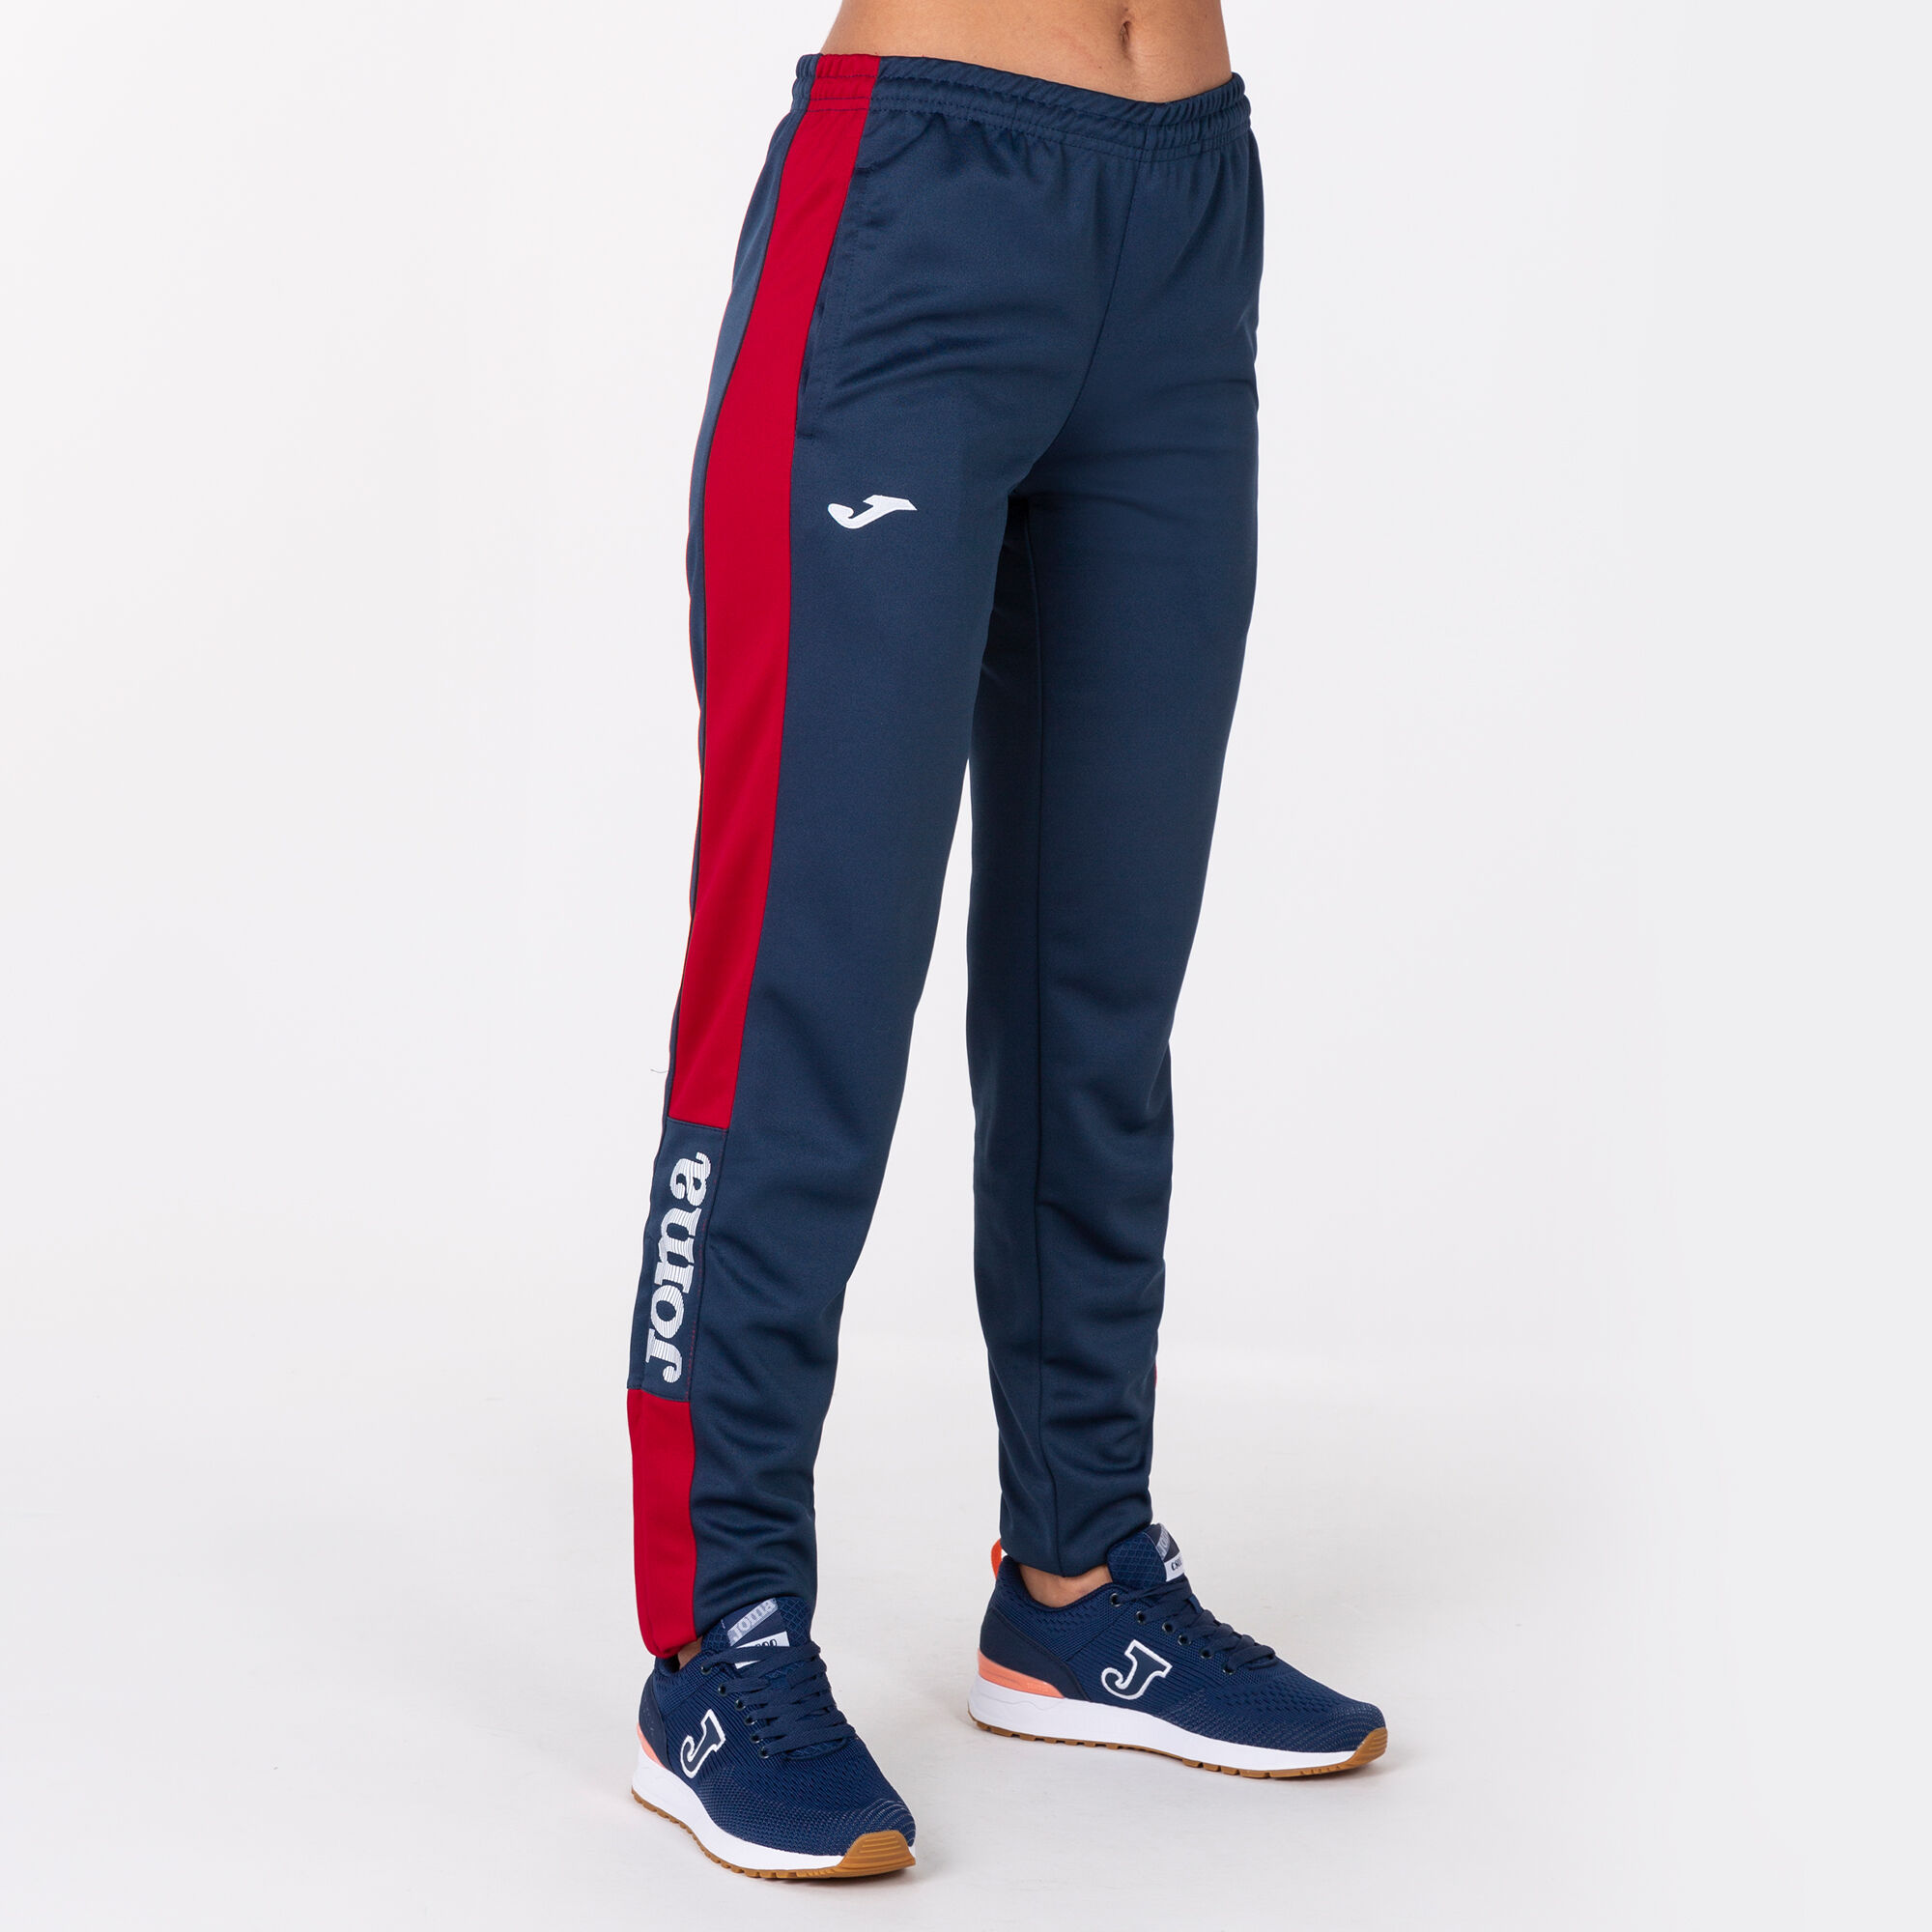 Longs pants woman Championship IV navy blue red